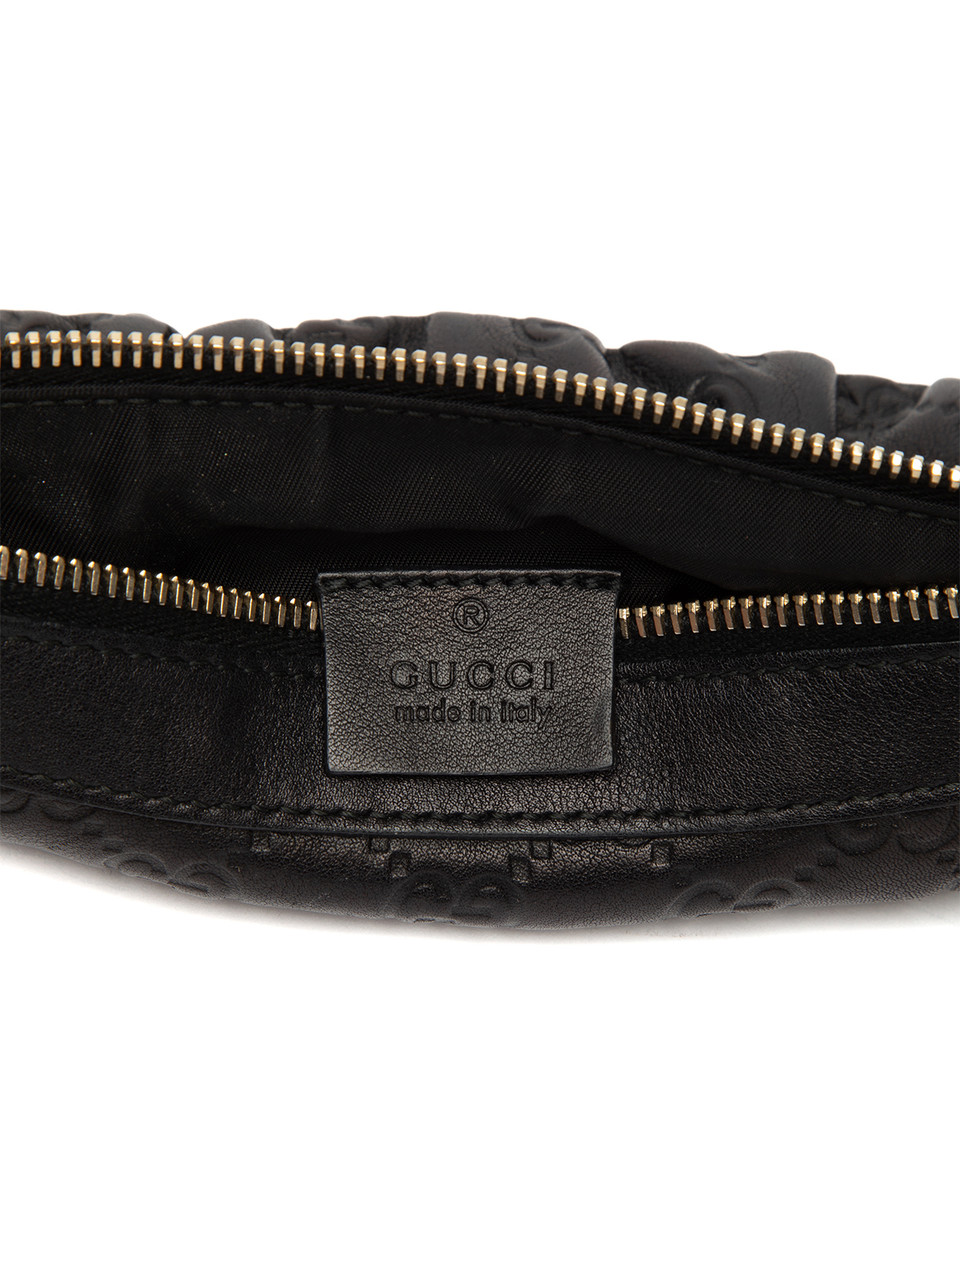 Gucci Vintage Guccisima Wristlet Bag